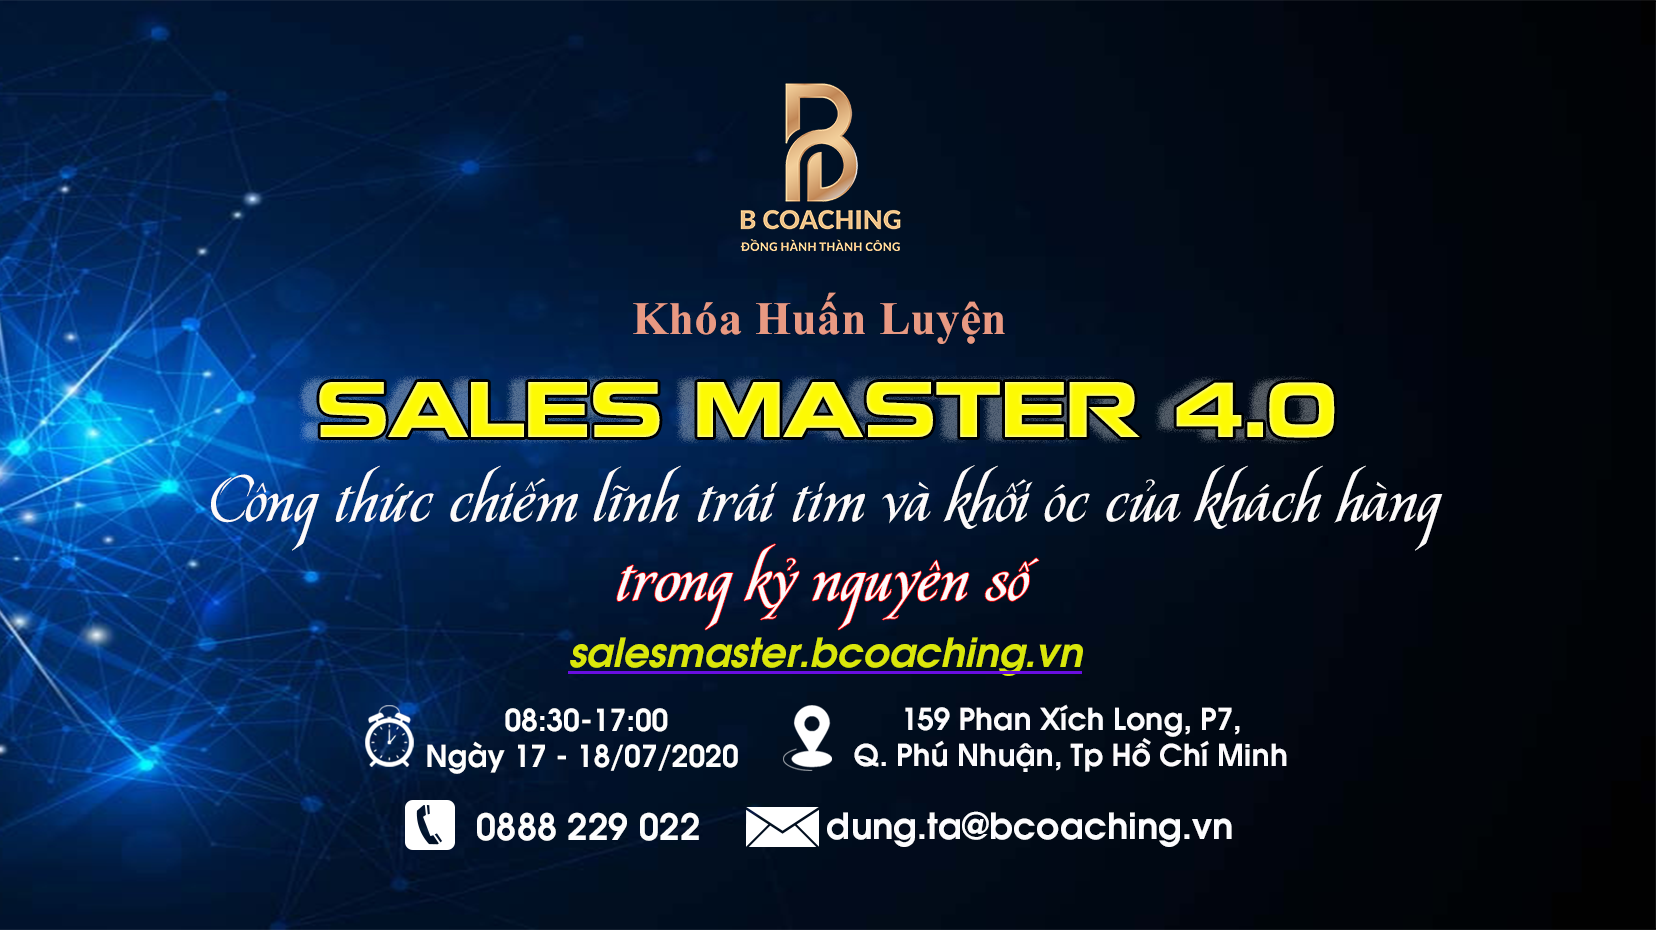 Sales Master 4.0